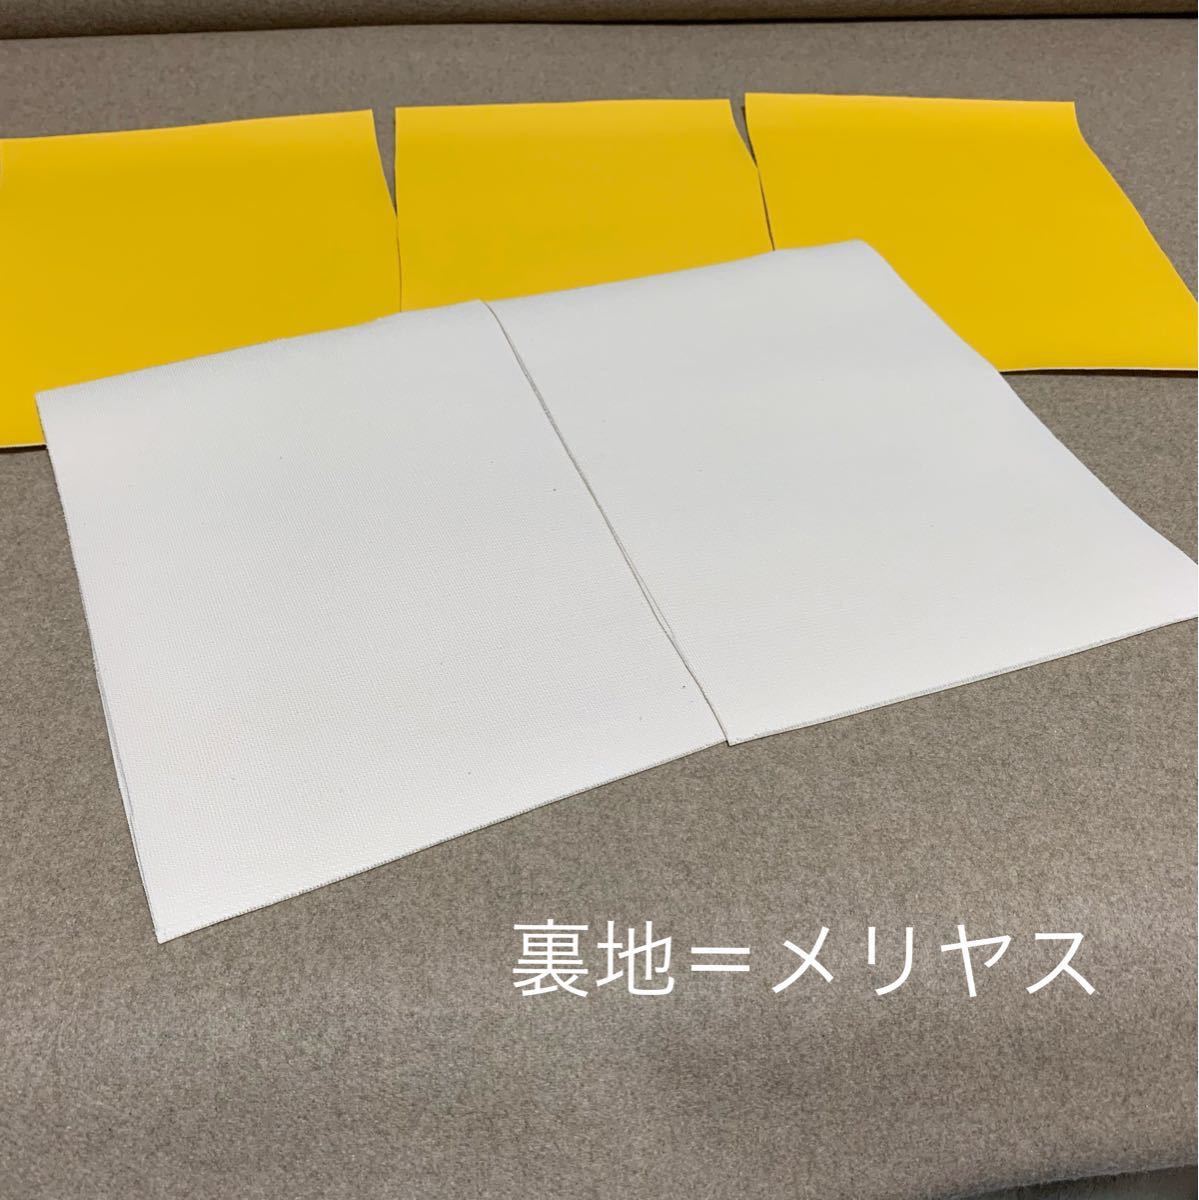 Nagichi99様専用【B】A4サイズ【人気品】イエロー系 ハギレ 5枚セット PVC 合成皮革